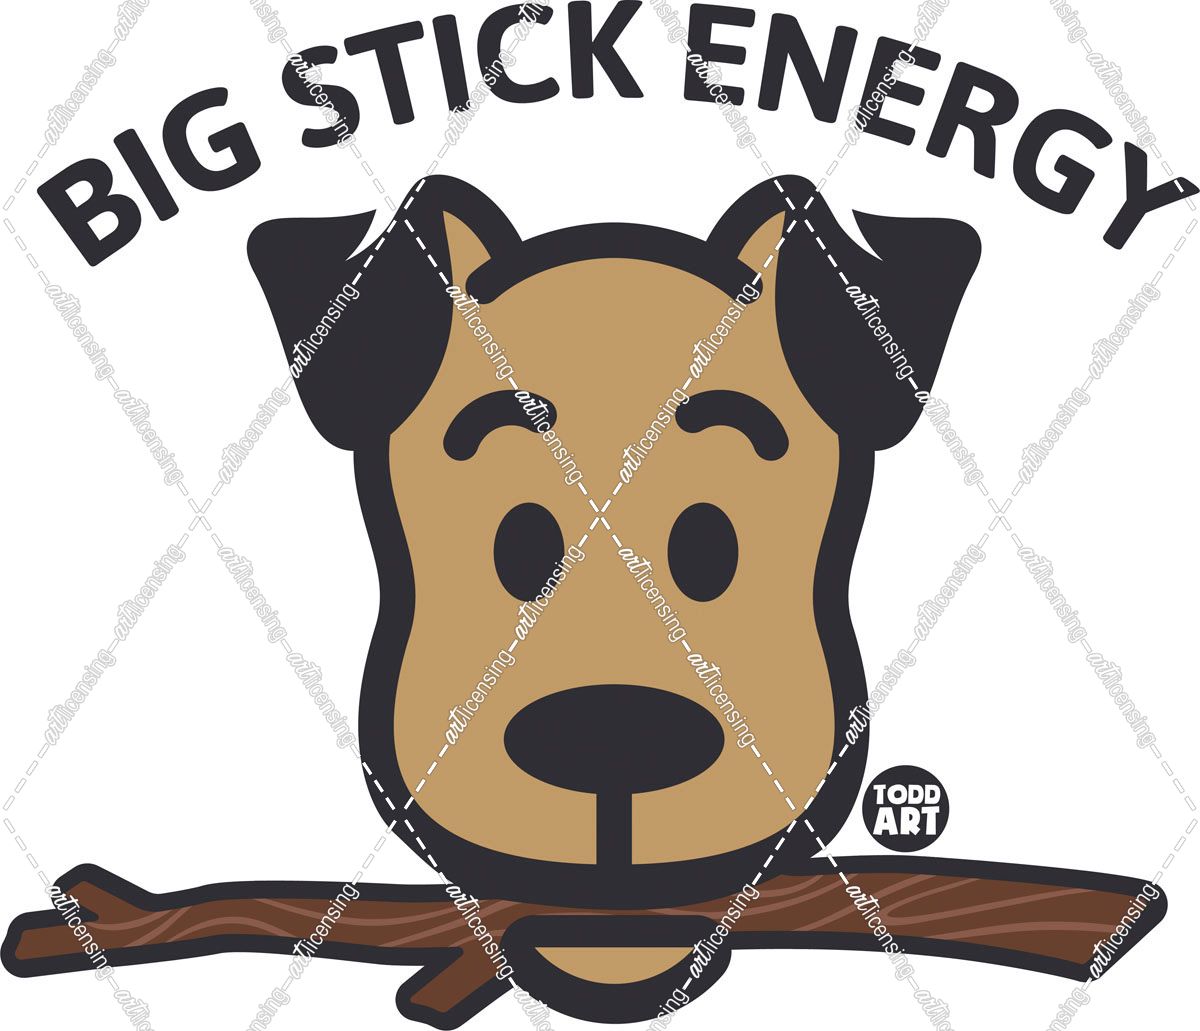 Big Stick Energy